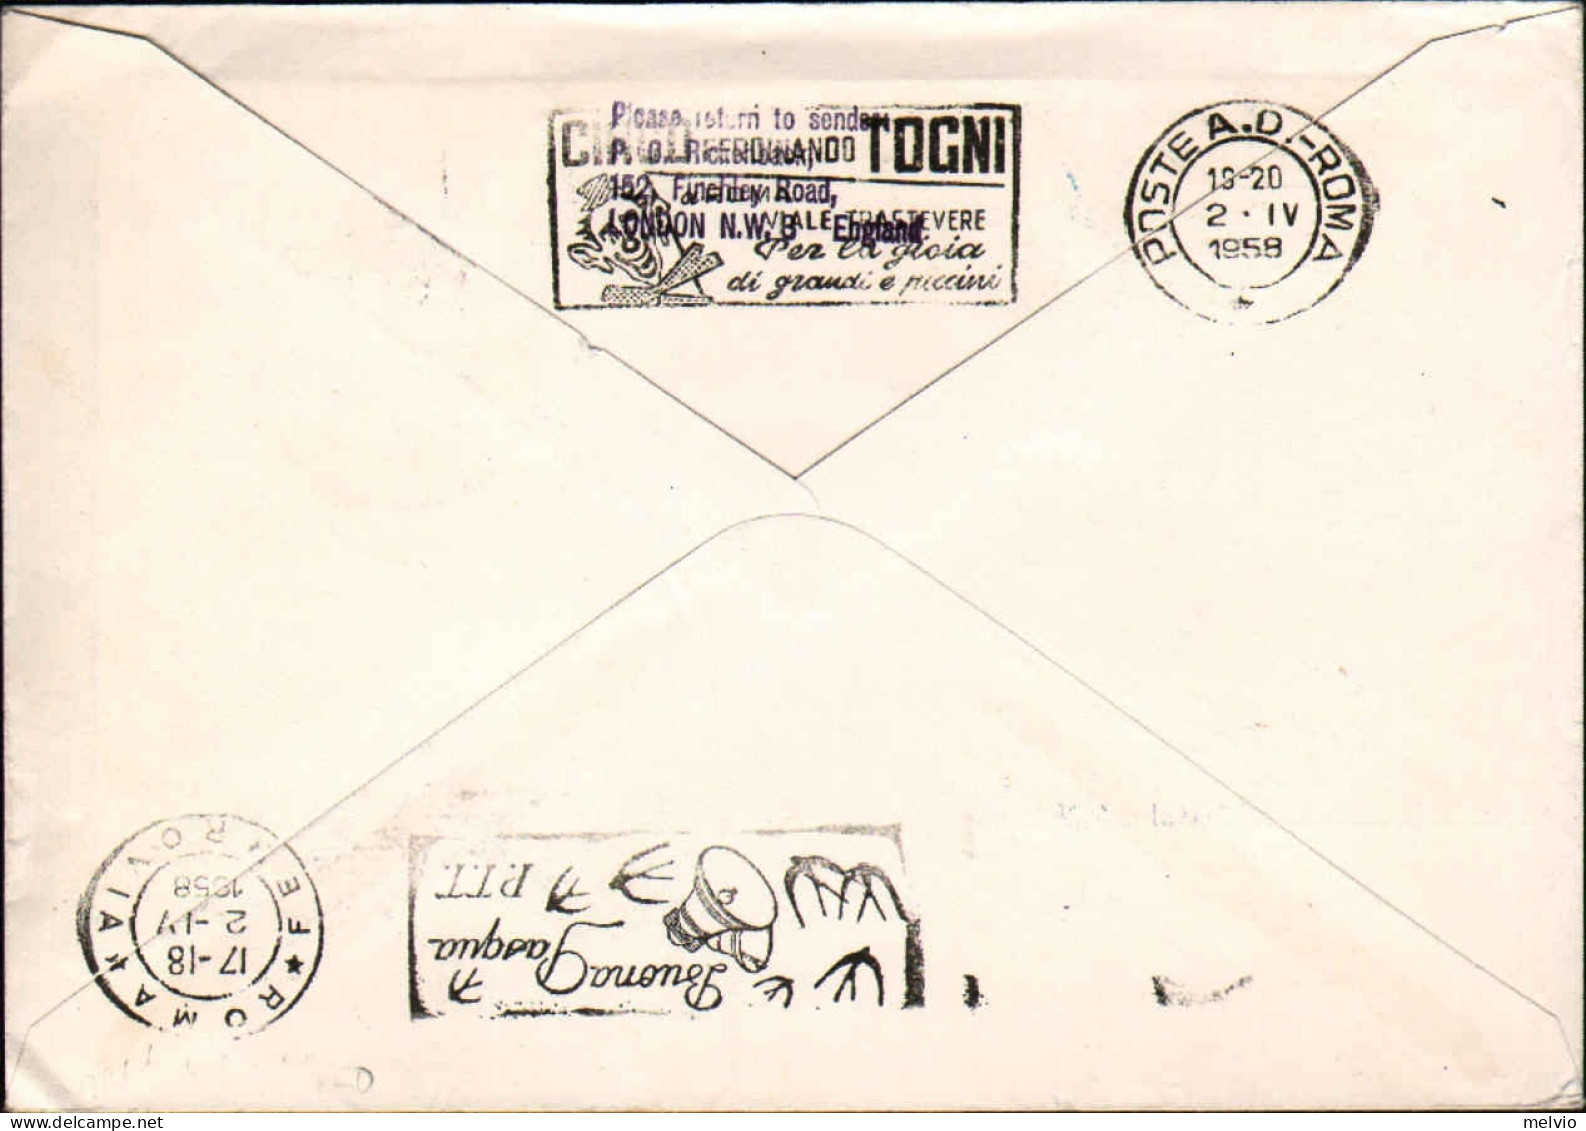 1958-Germania Lufthansa Amburgo Roma Del 2 Aprile - Lettres & Documents